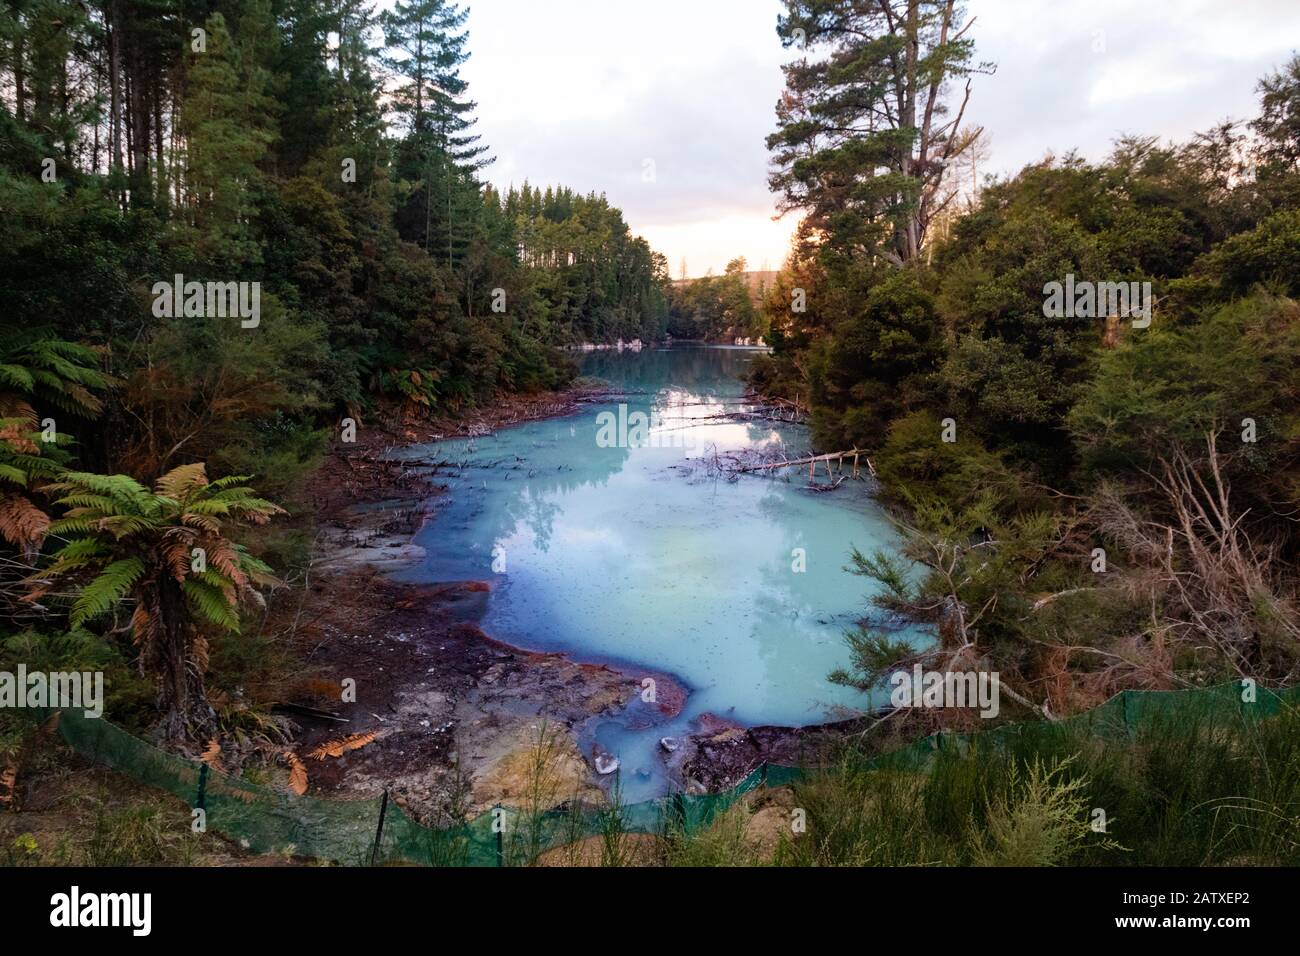 Das farbenfrohe Thermalmineral Echo Lake wurde in der Nähe von Wai o Tapu, Rotorua, Neuseeland, entdeckt Stockfoto